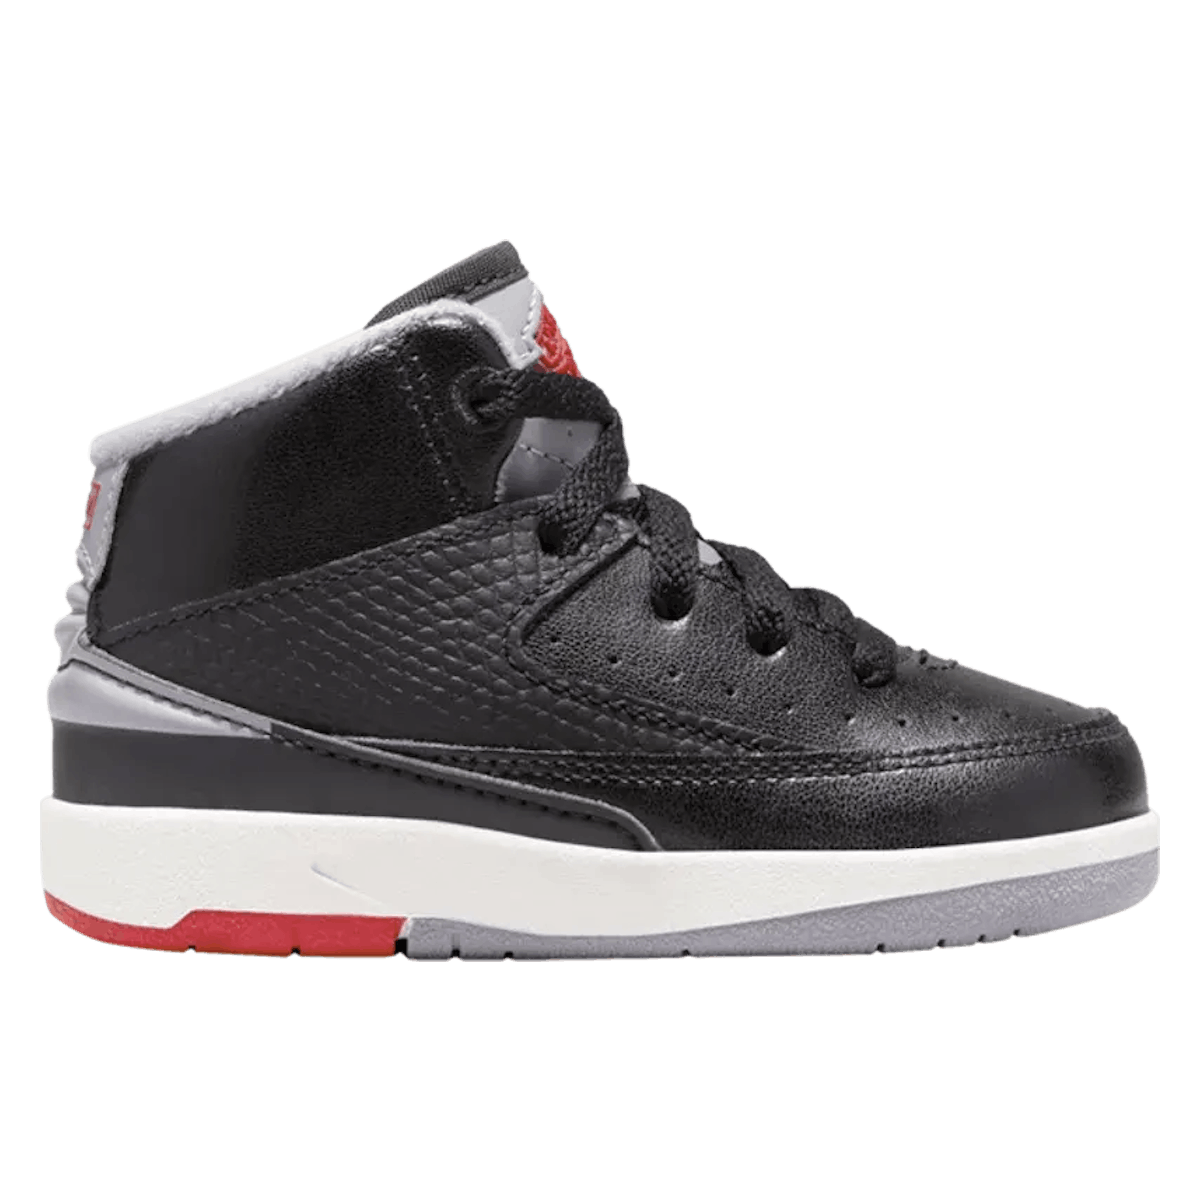 Air Jordan 2 Retro TD "Black Cement"